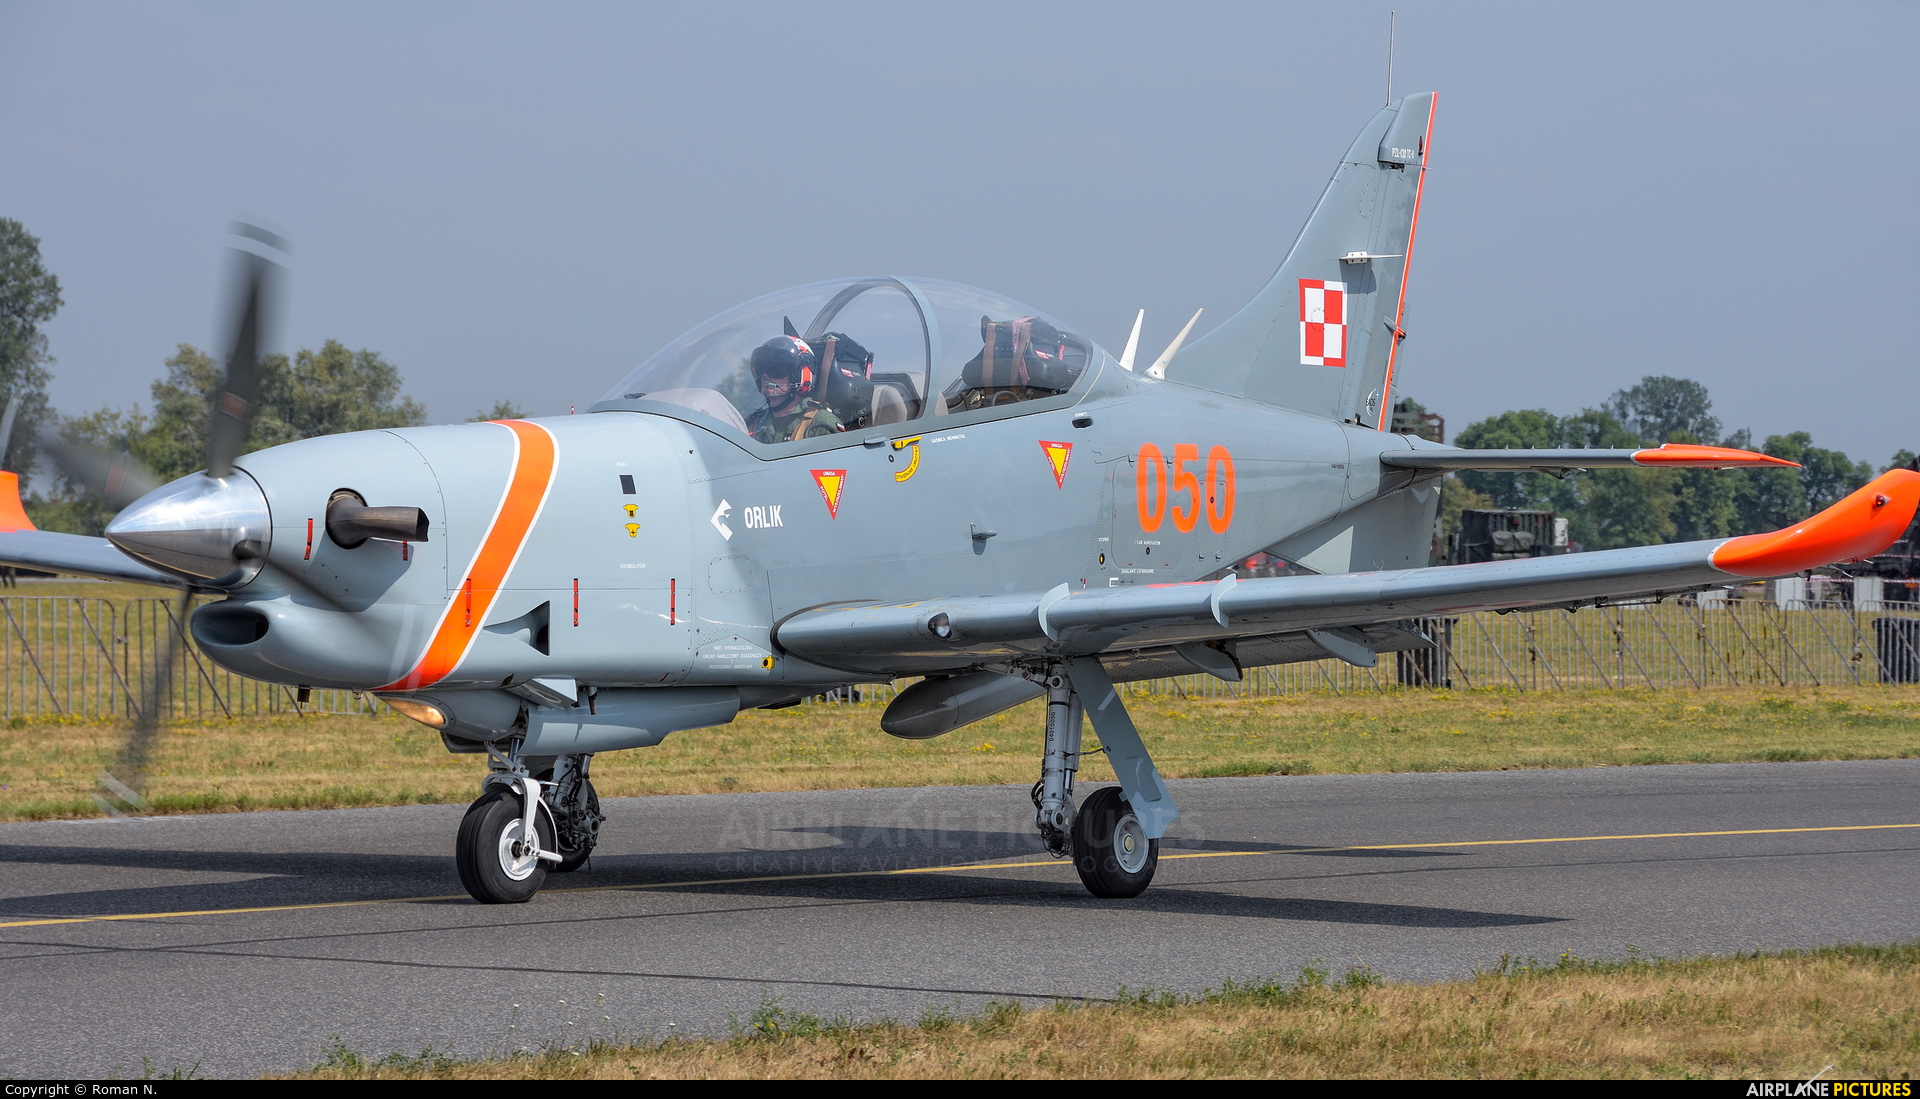 Poland - Air Force "Orlik Acrobatic Group" 050 aircraft at Radom - Sadków